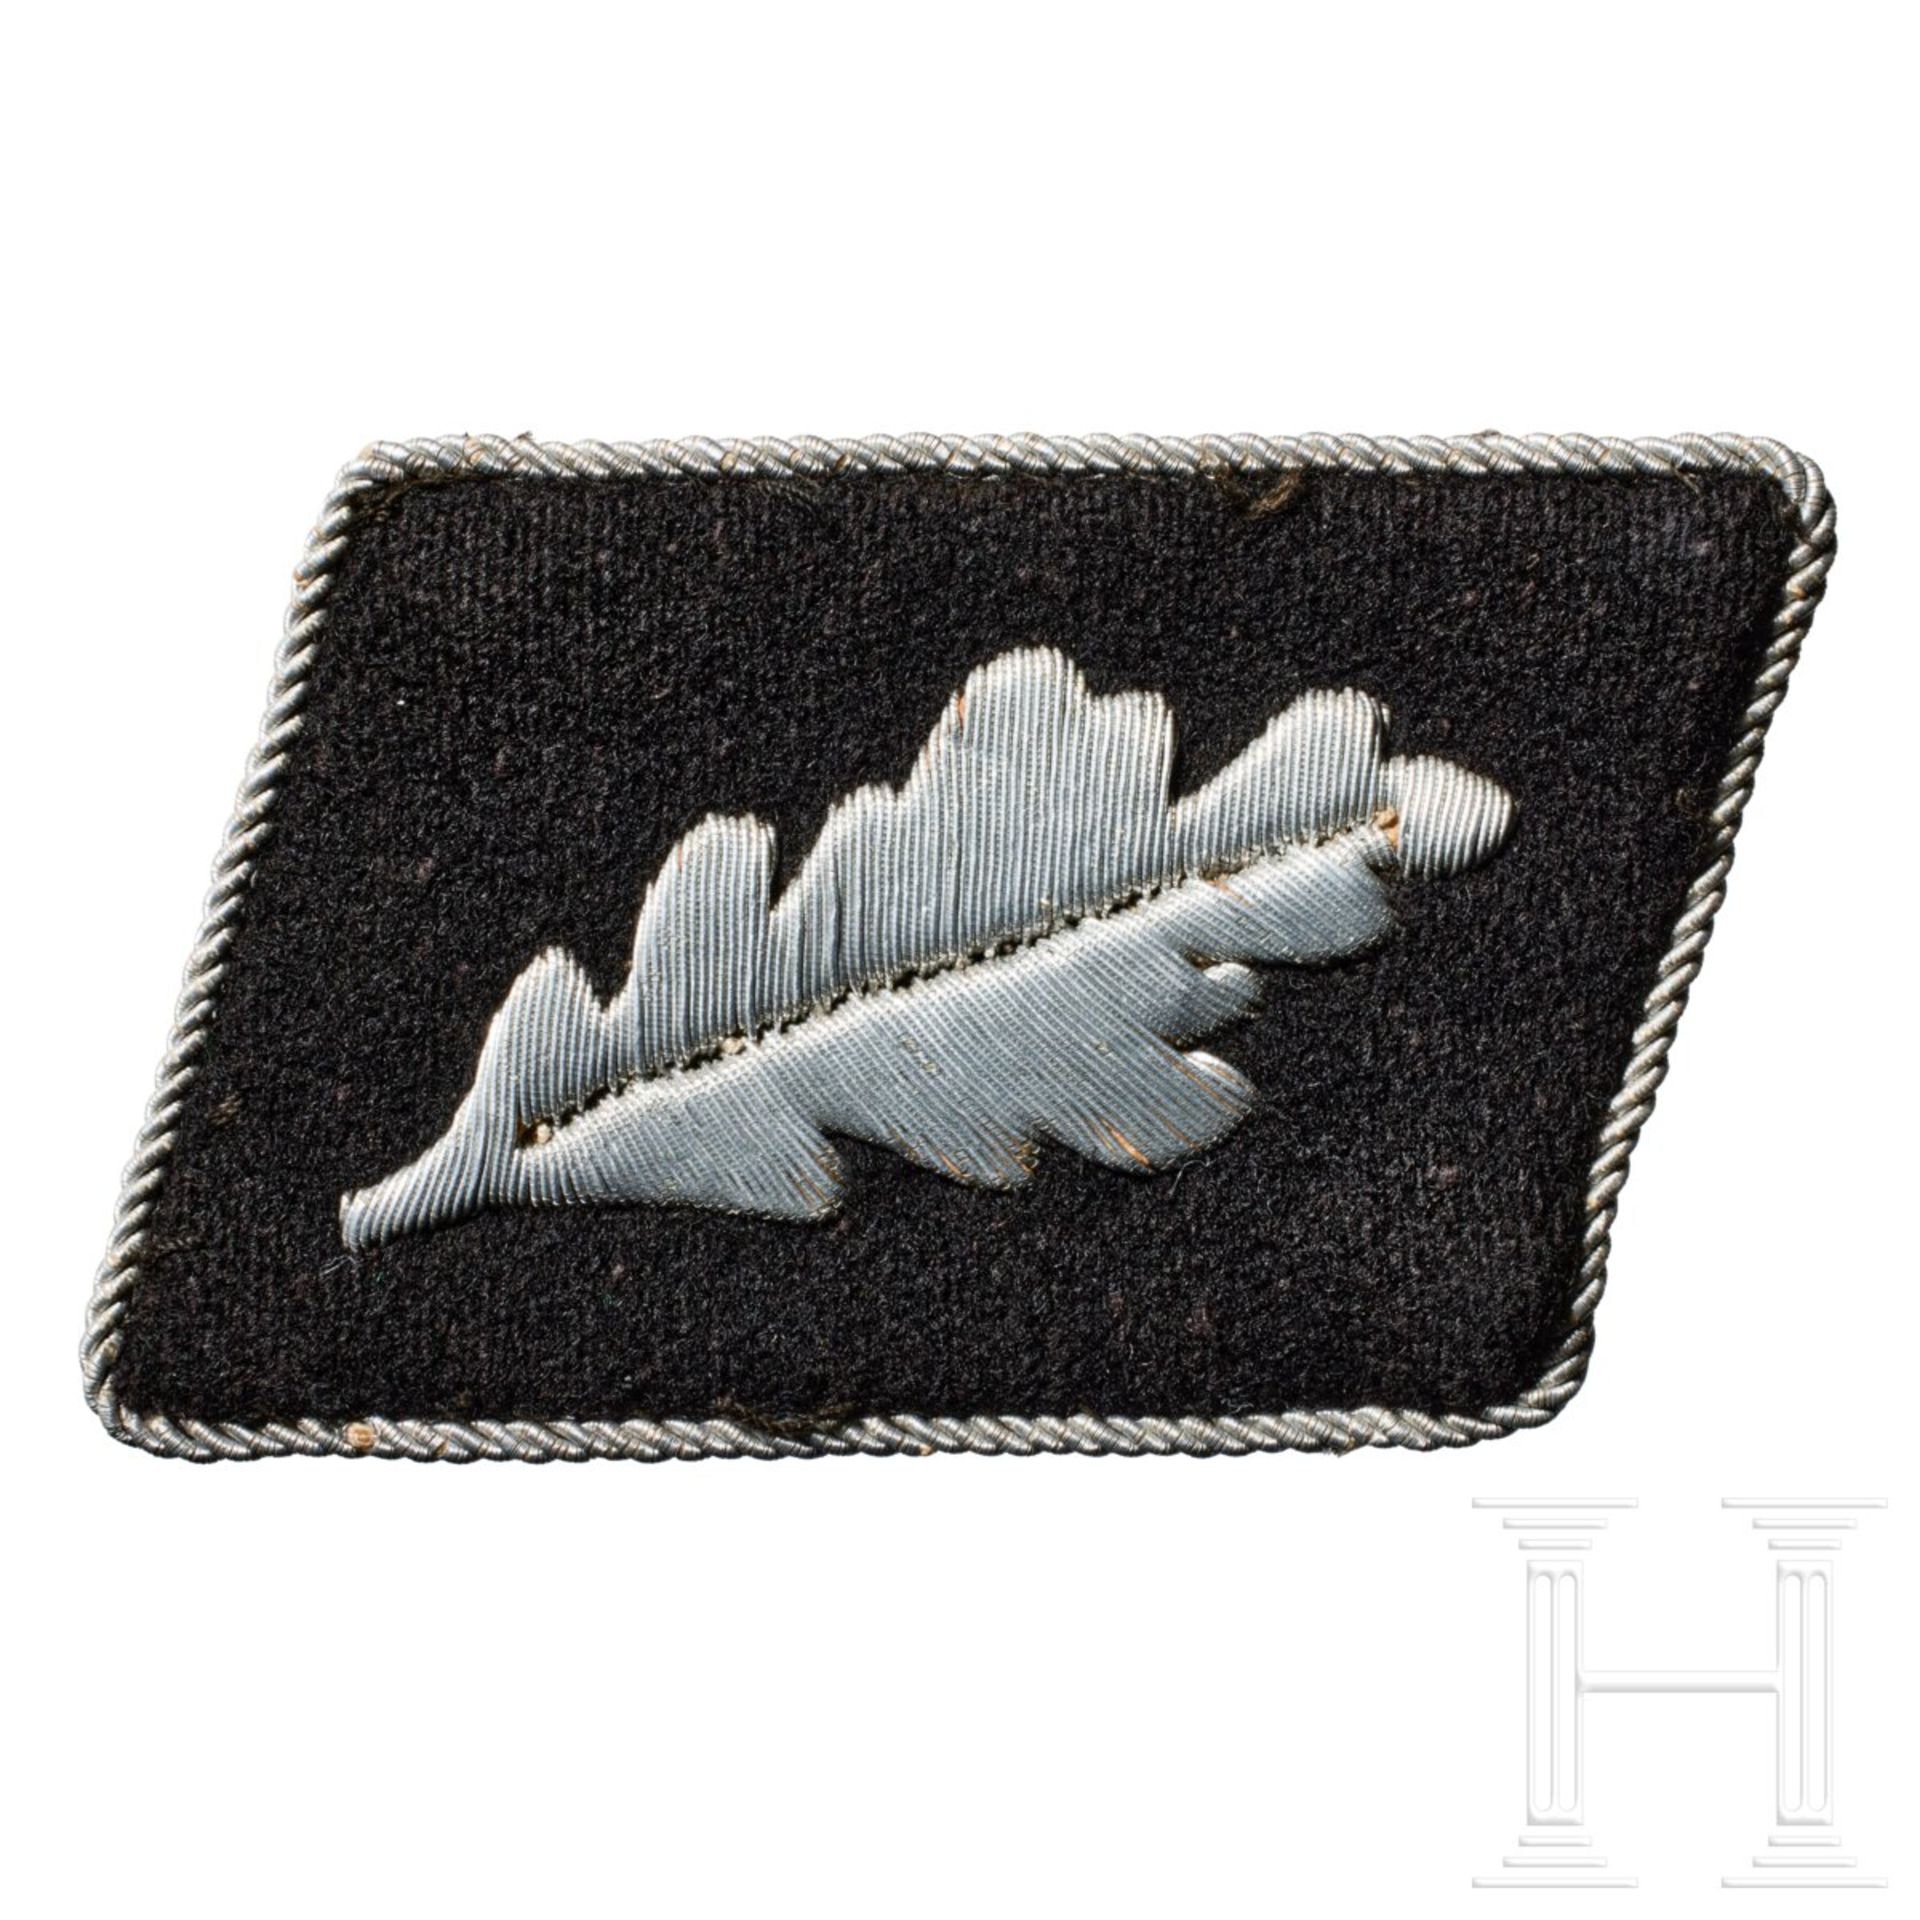 A Right Collar Tab for SS-Standartenführer, 1934-42